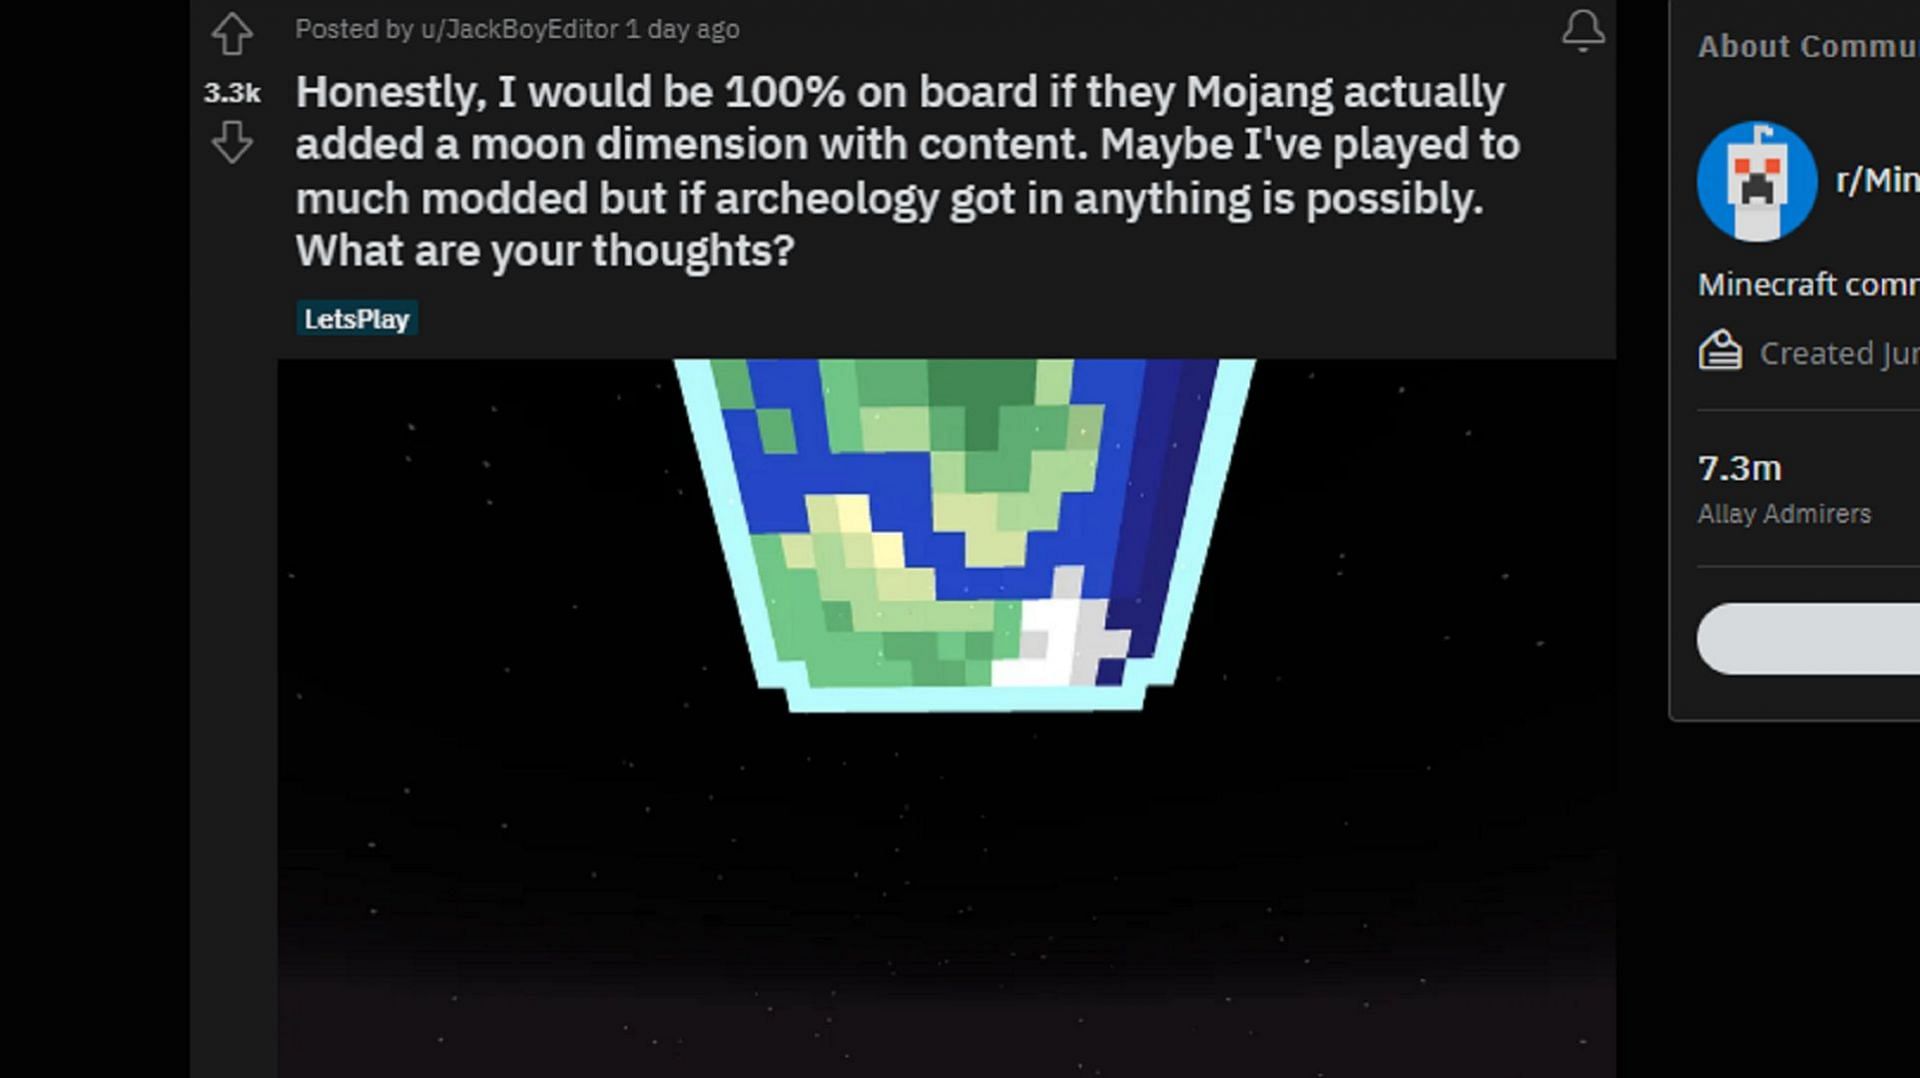 JackBoyEditor&#039;s Minecraft Reddit post voicing support of adding the moon permanently into the game (Image via u/JackBoyEditor/Reddit)